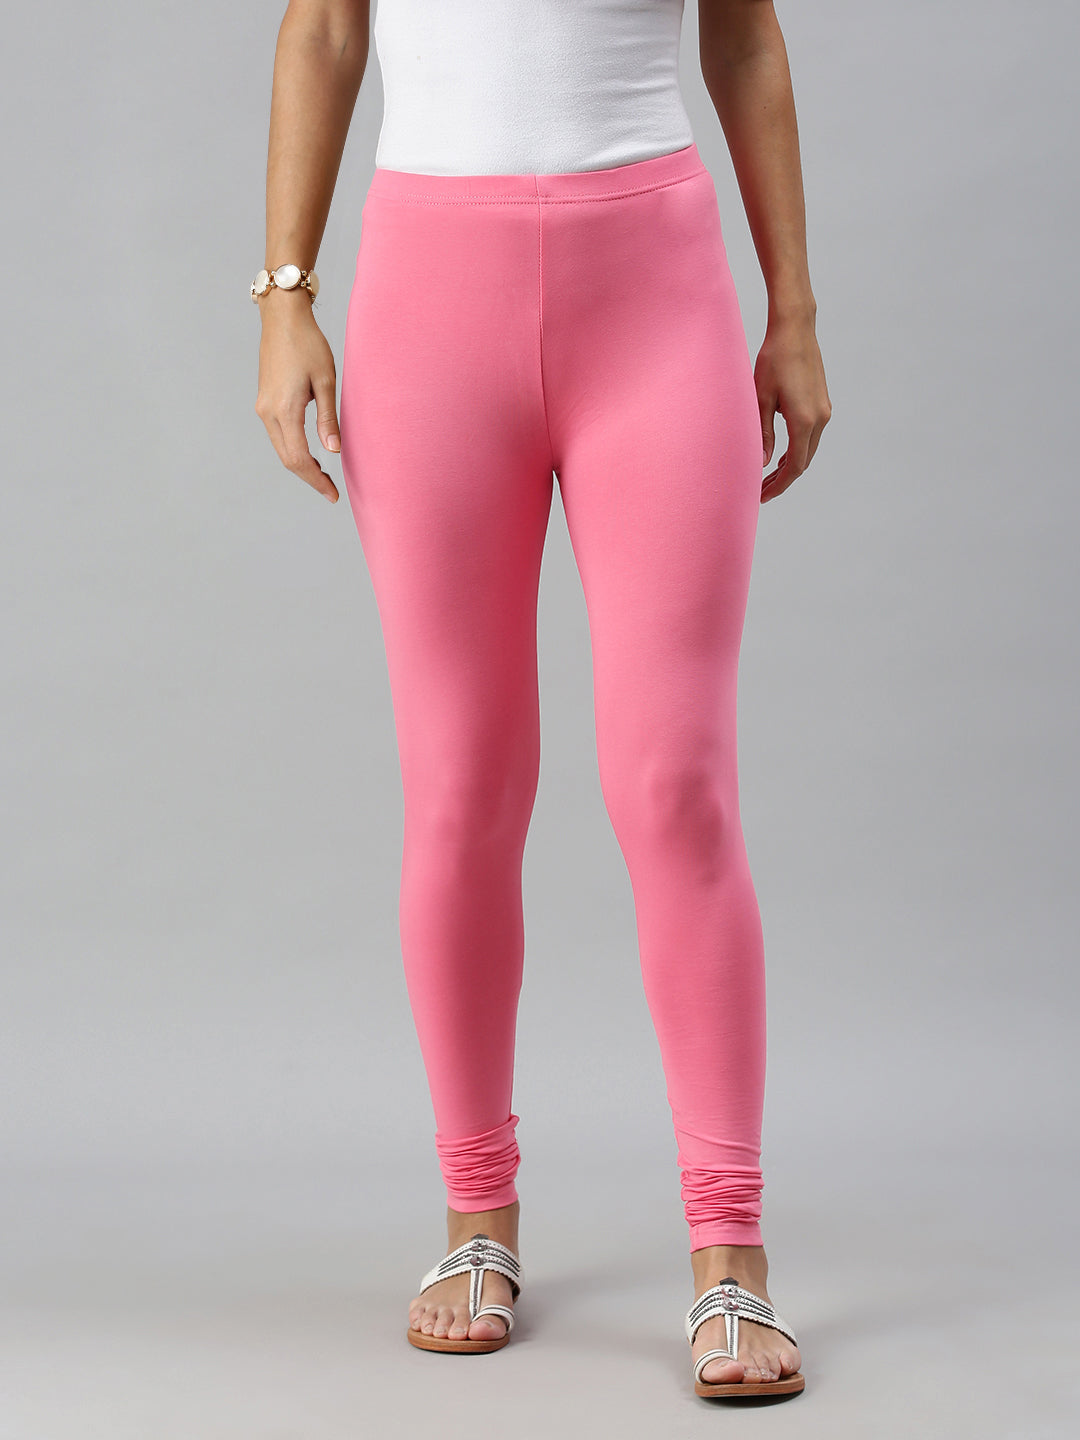 fcity.in - Kanna Hot Pink Regular Fit Churidar Legging / Gorgeous Modern  Women